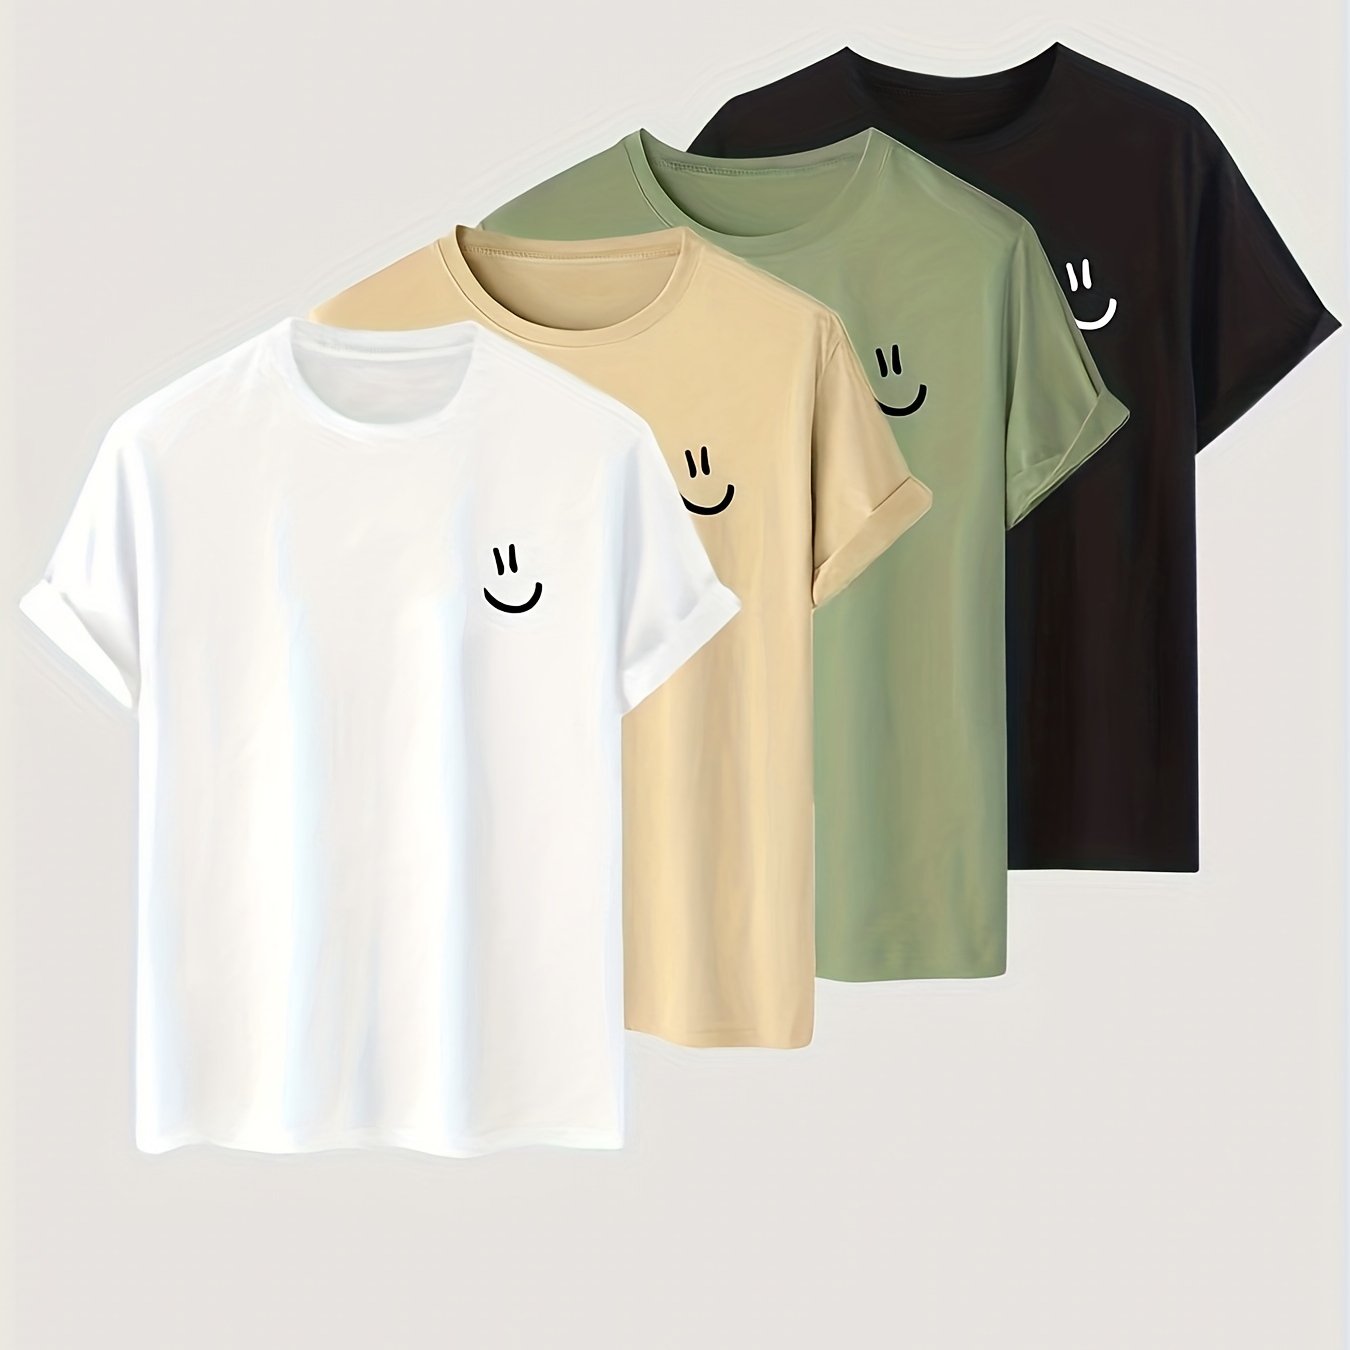 4pc\u002Fset Cartoon Smiling Face Pattern Print Men's Comfy Slightly Stretch T-shirt, Graphic Tee Men's Summer Clothes, Men's Clothing